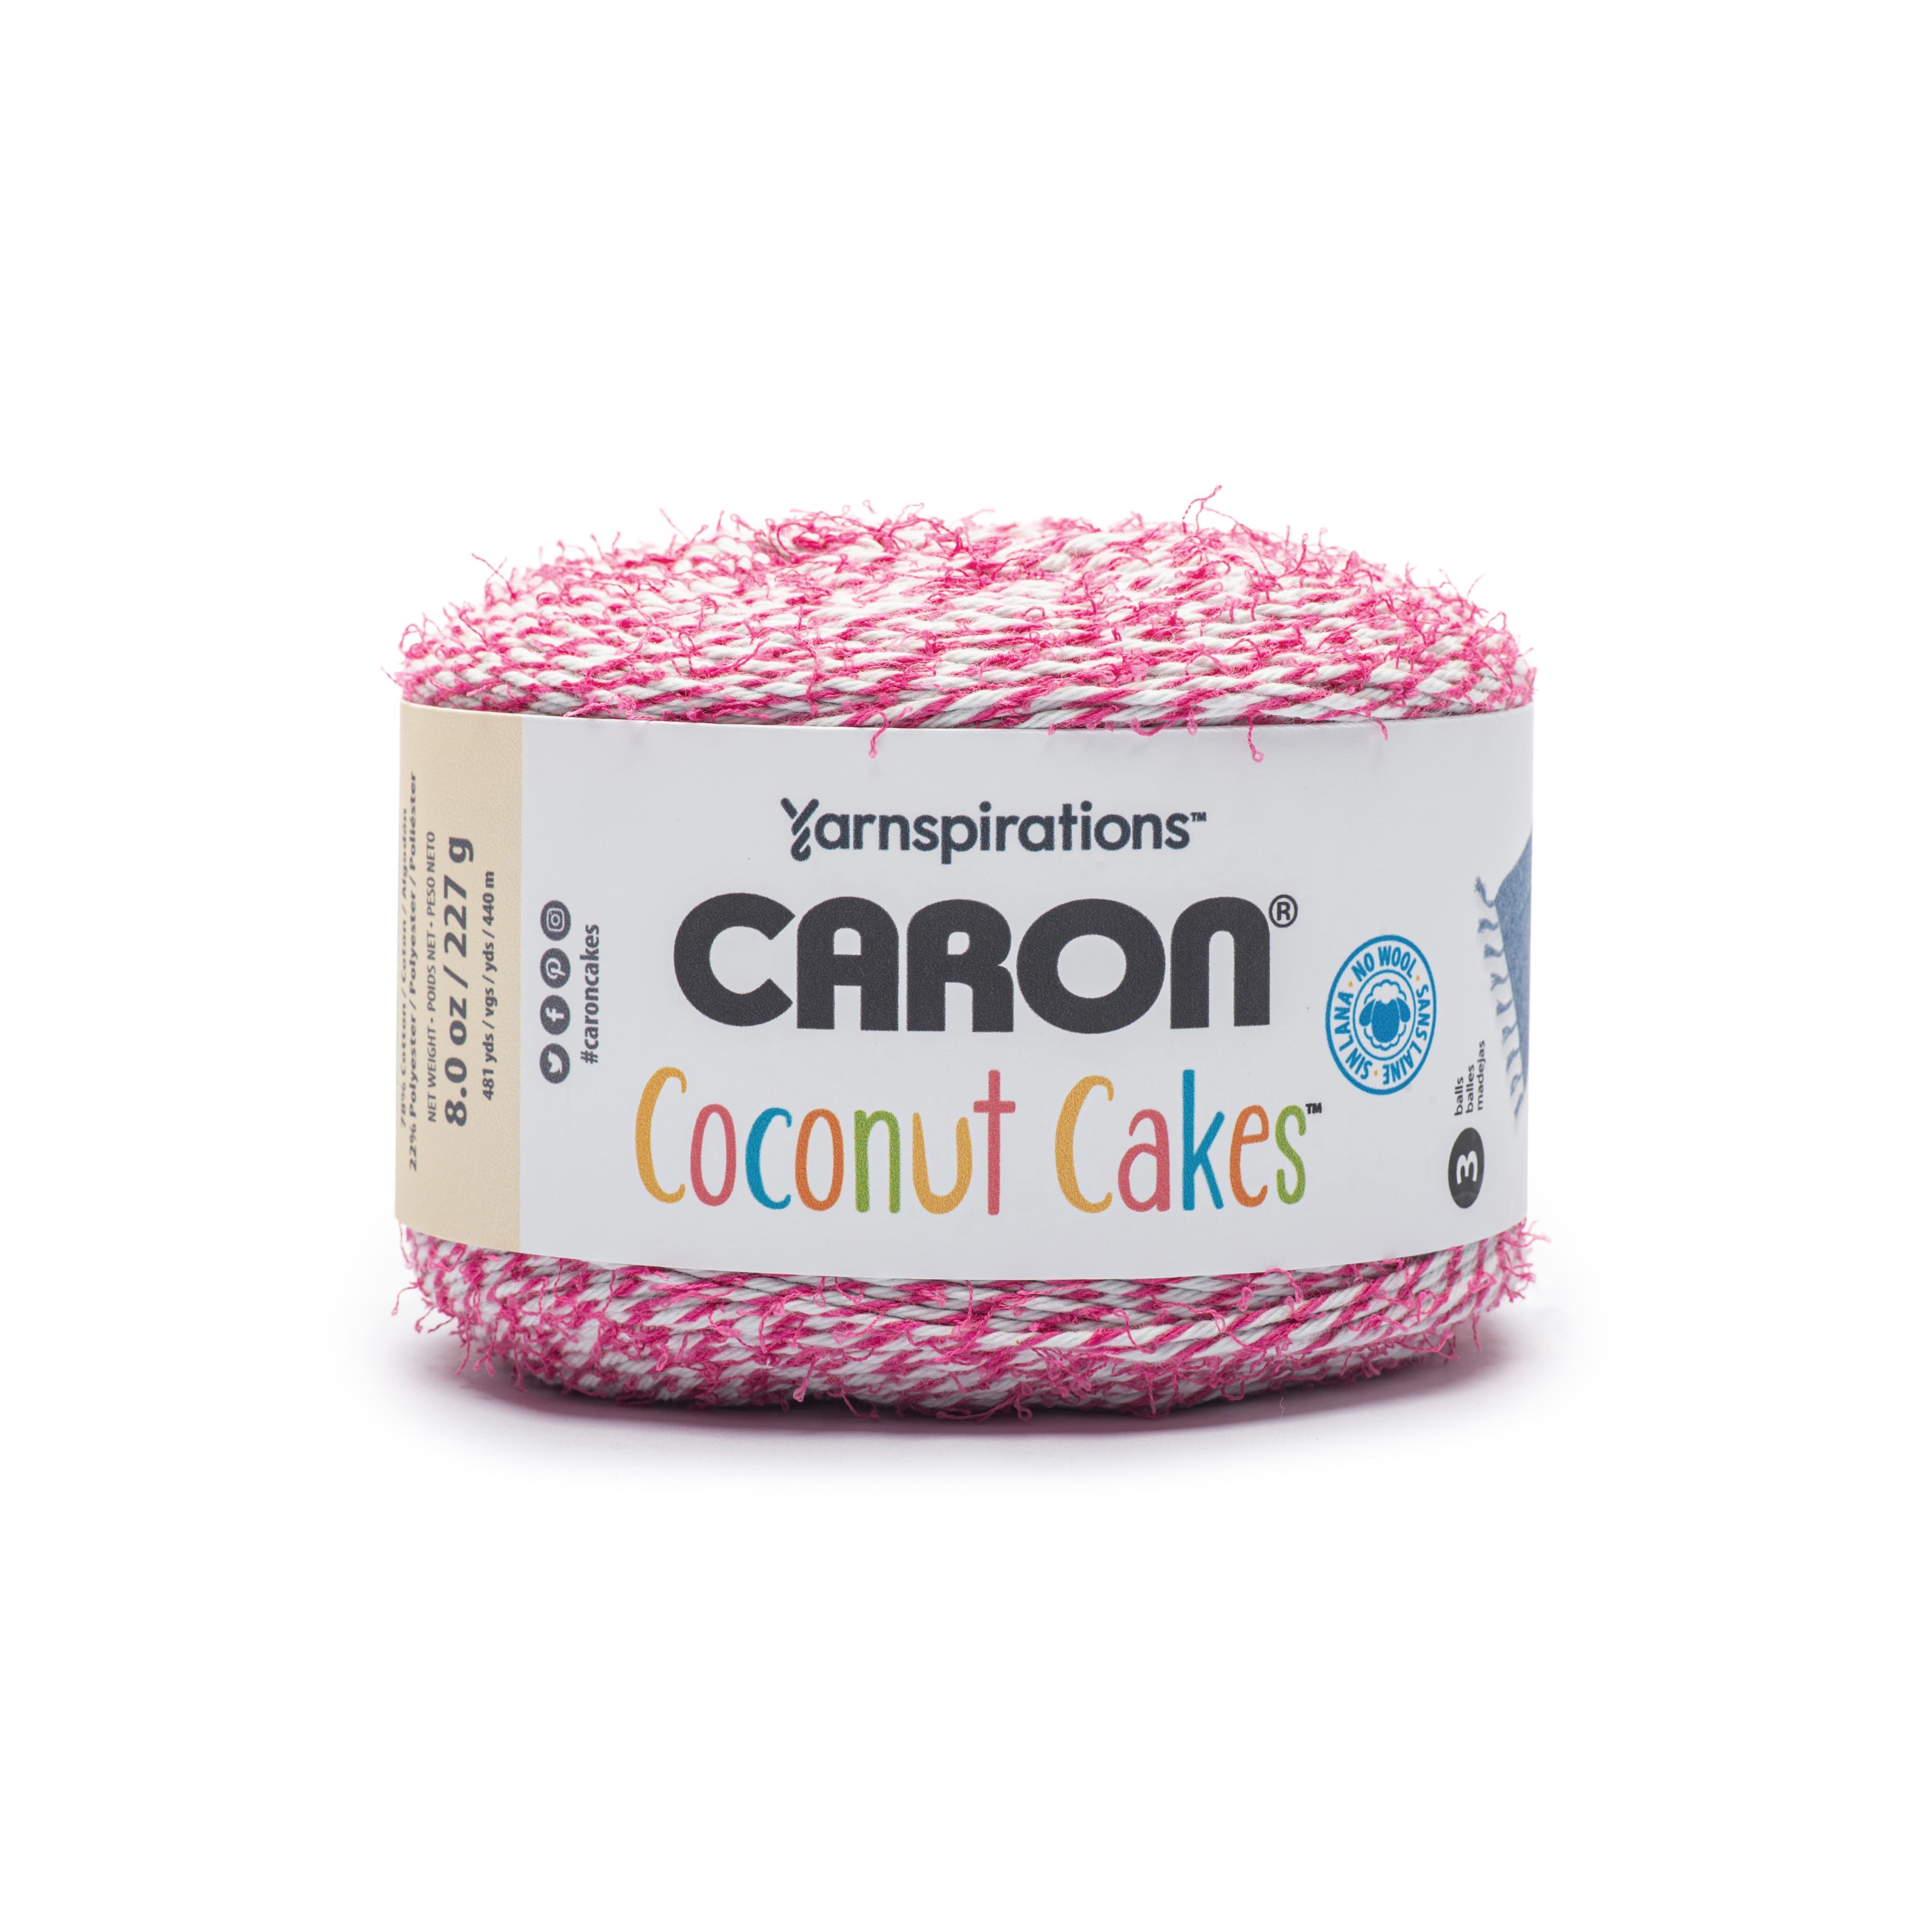 yarn is Caron latte cakes in coconut creme 🥥 #sentrosweater #sentrok